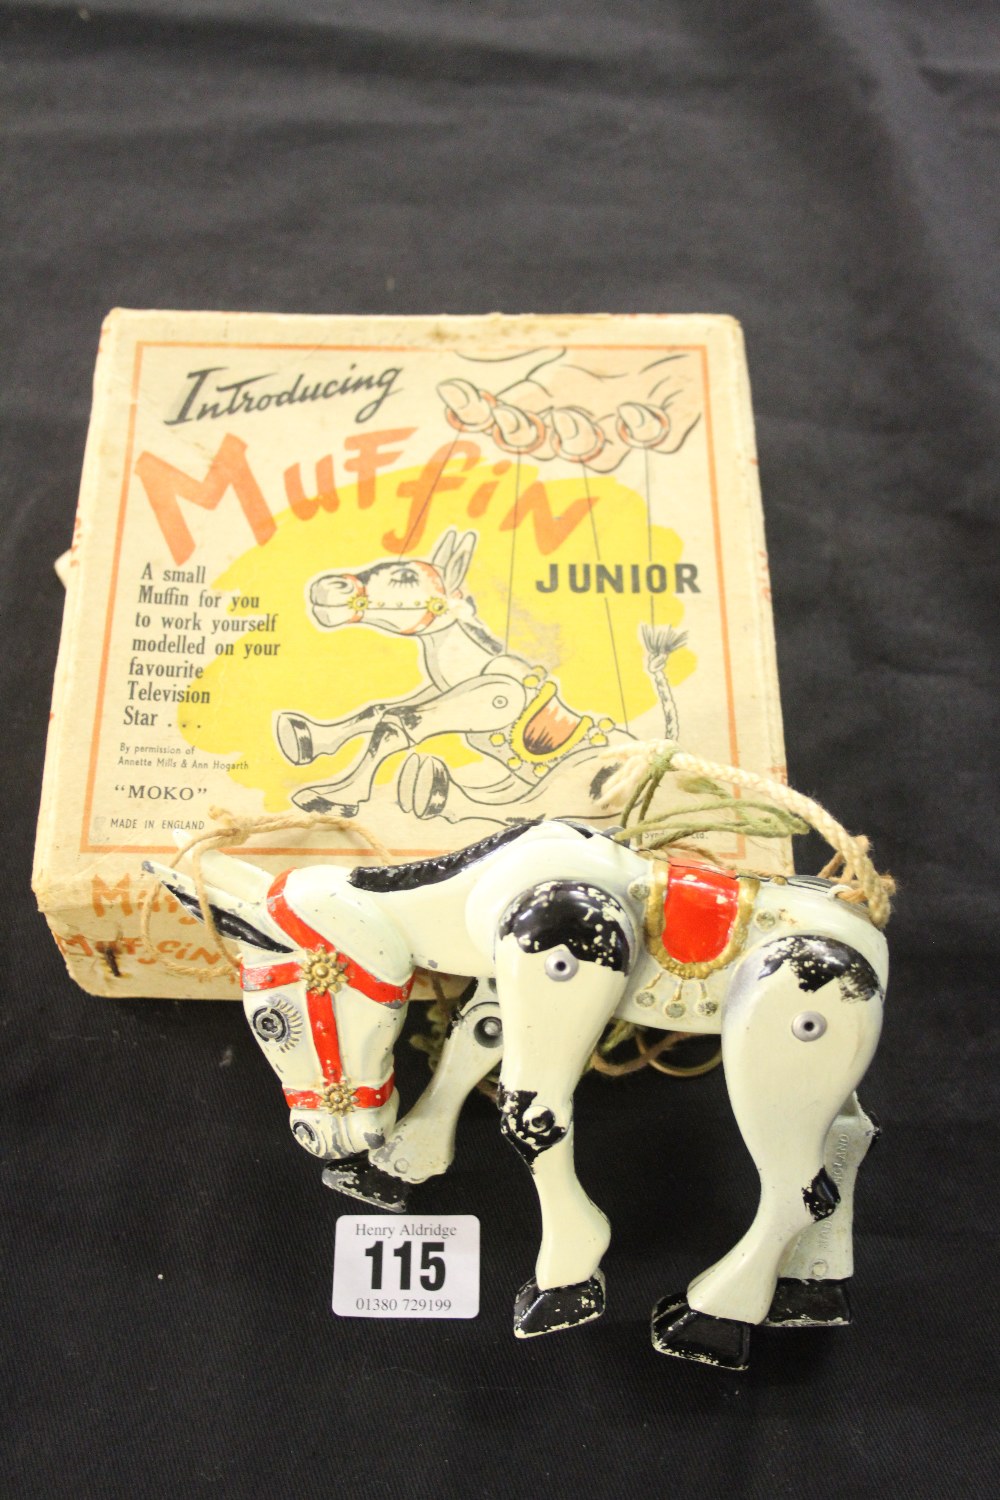 Toys: Diecast "Moko" muffin Junior in the original box.